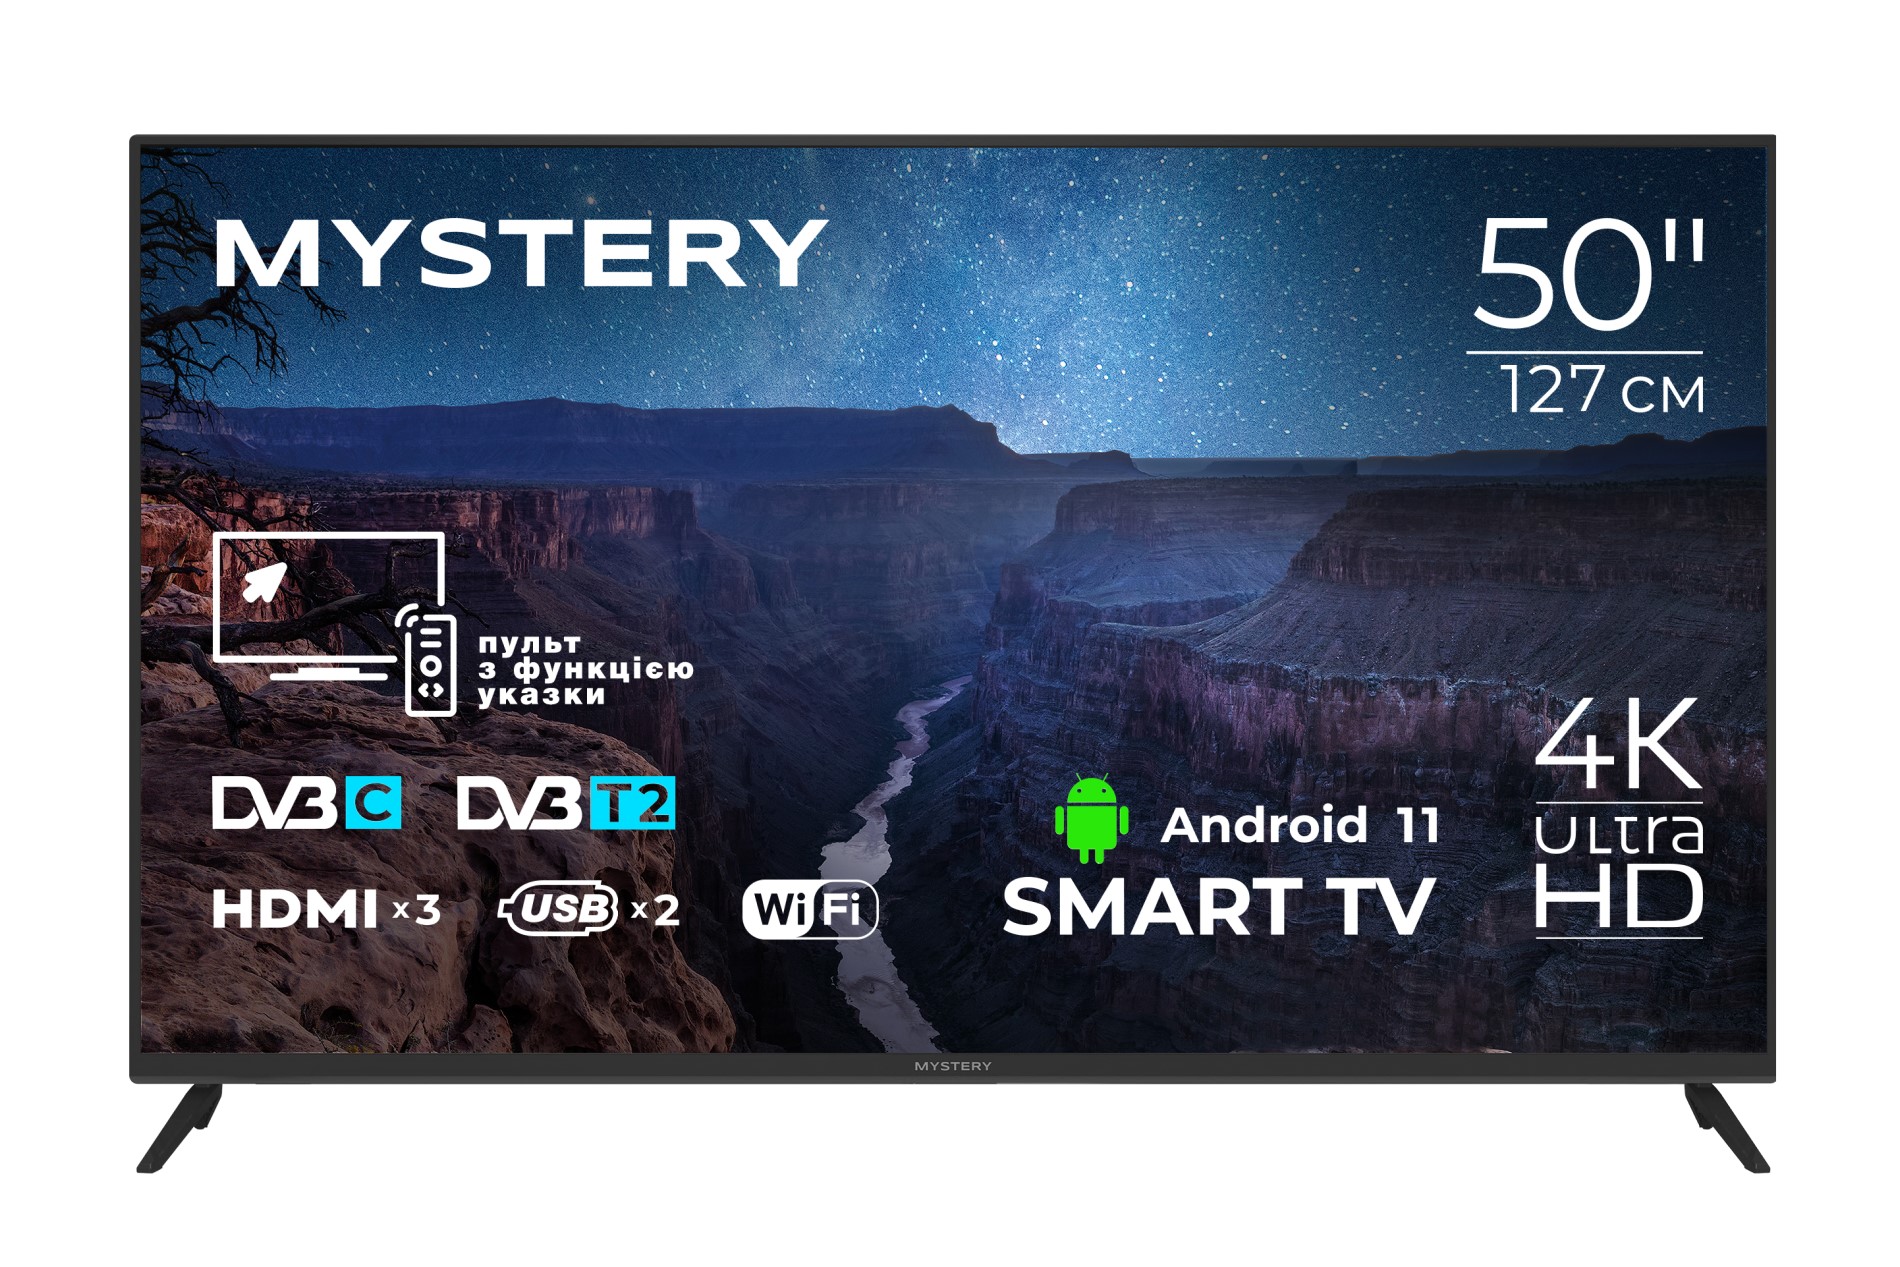 Mystery MTV-5060UDT2 Smart TV